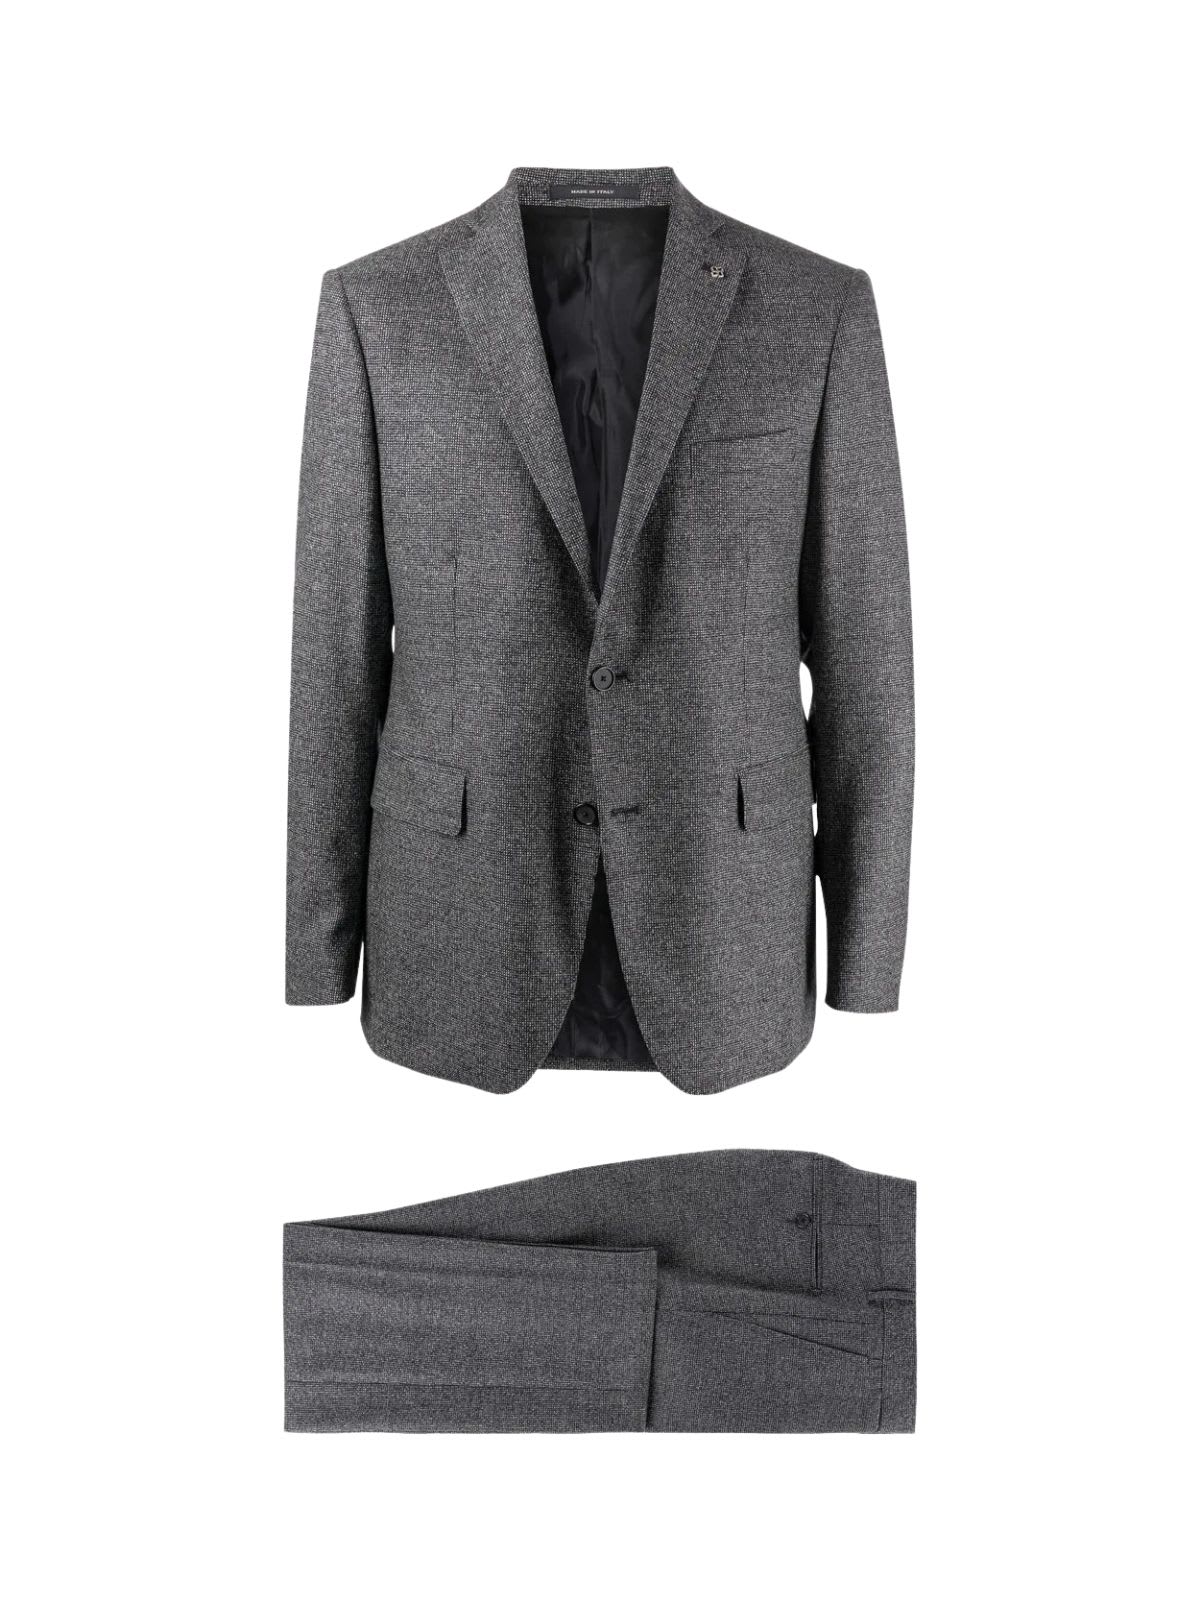 Tagliatore Napoli Suit